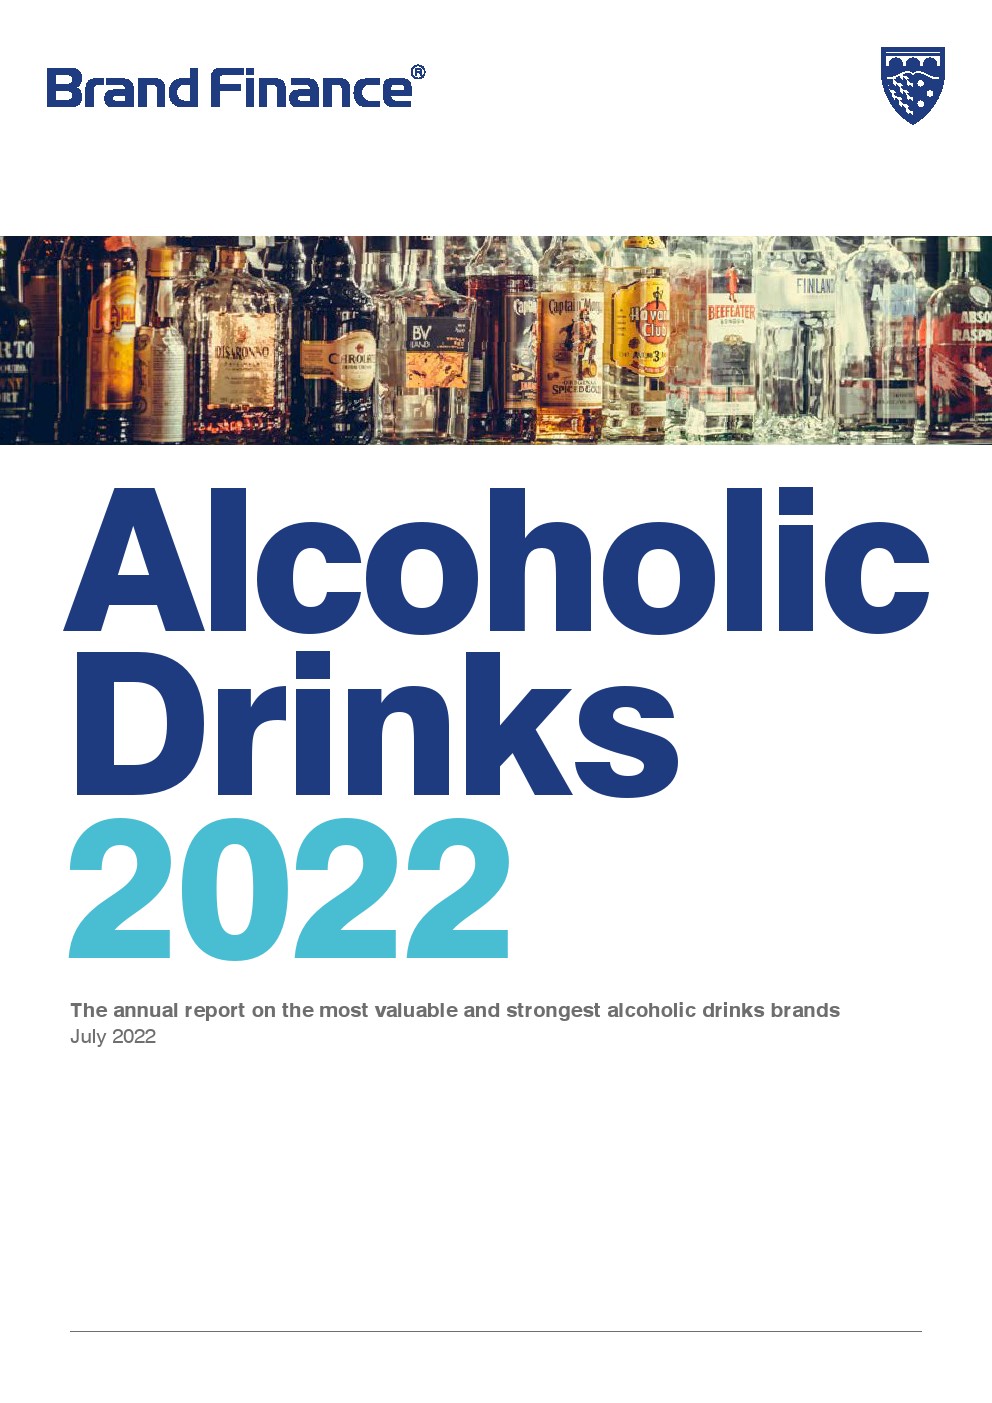 Brand Finance：2022年酒精饮料品牌榜报告